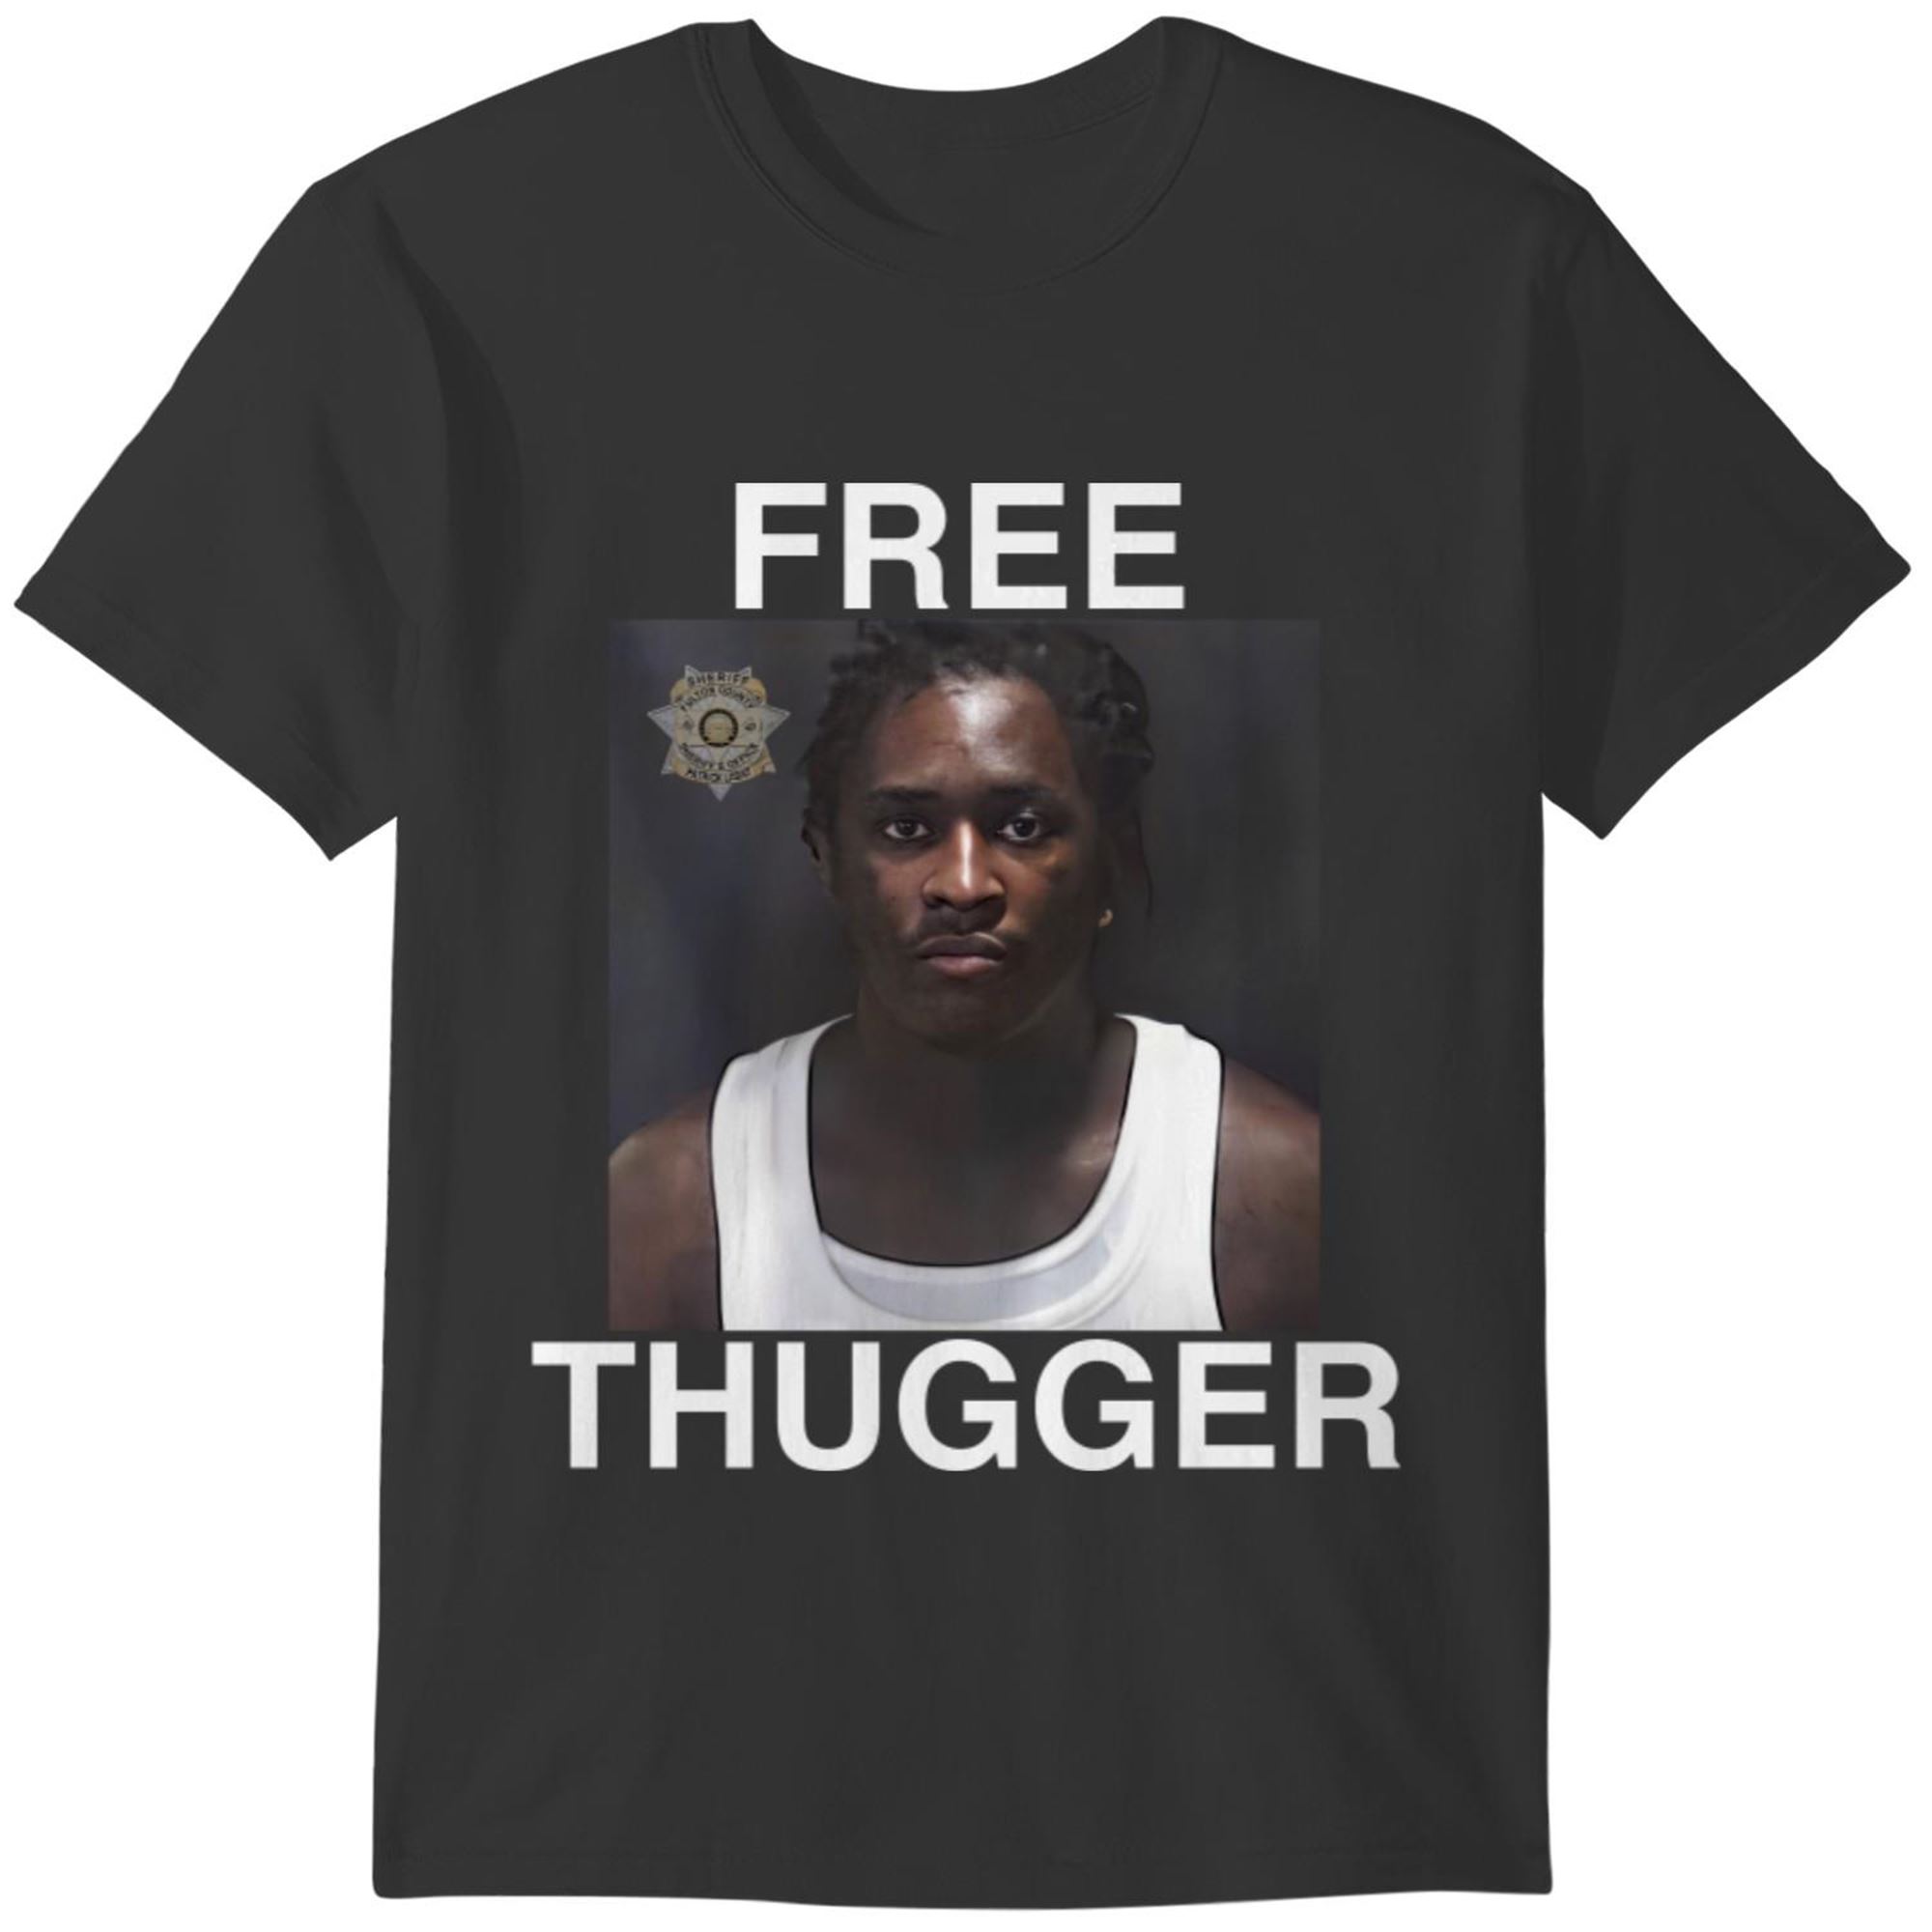 Free Thug Young Thug Mugshot T-shirt Size Up To 5xl